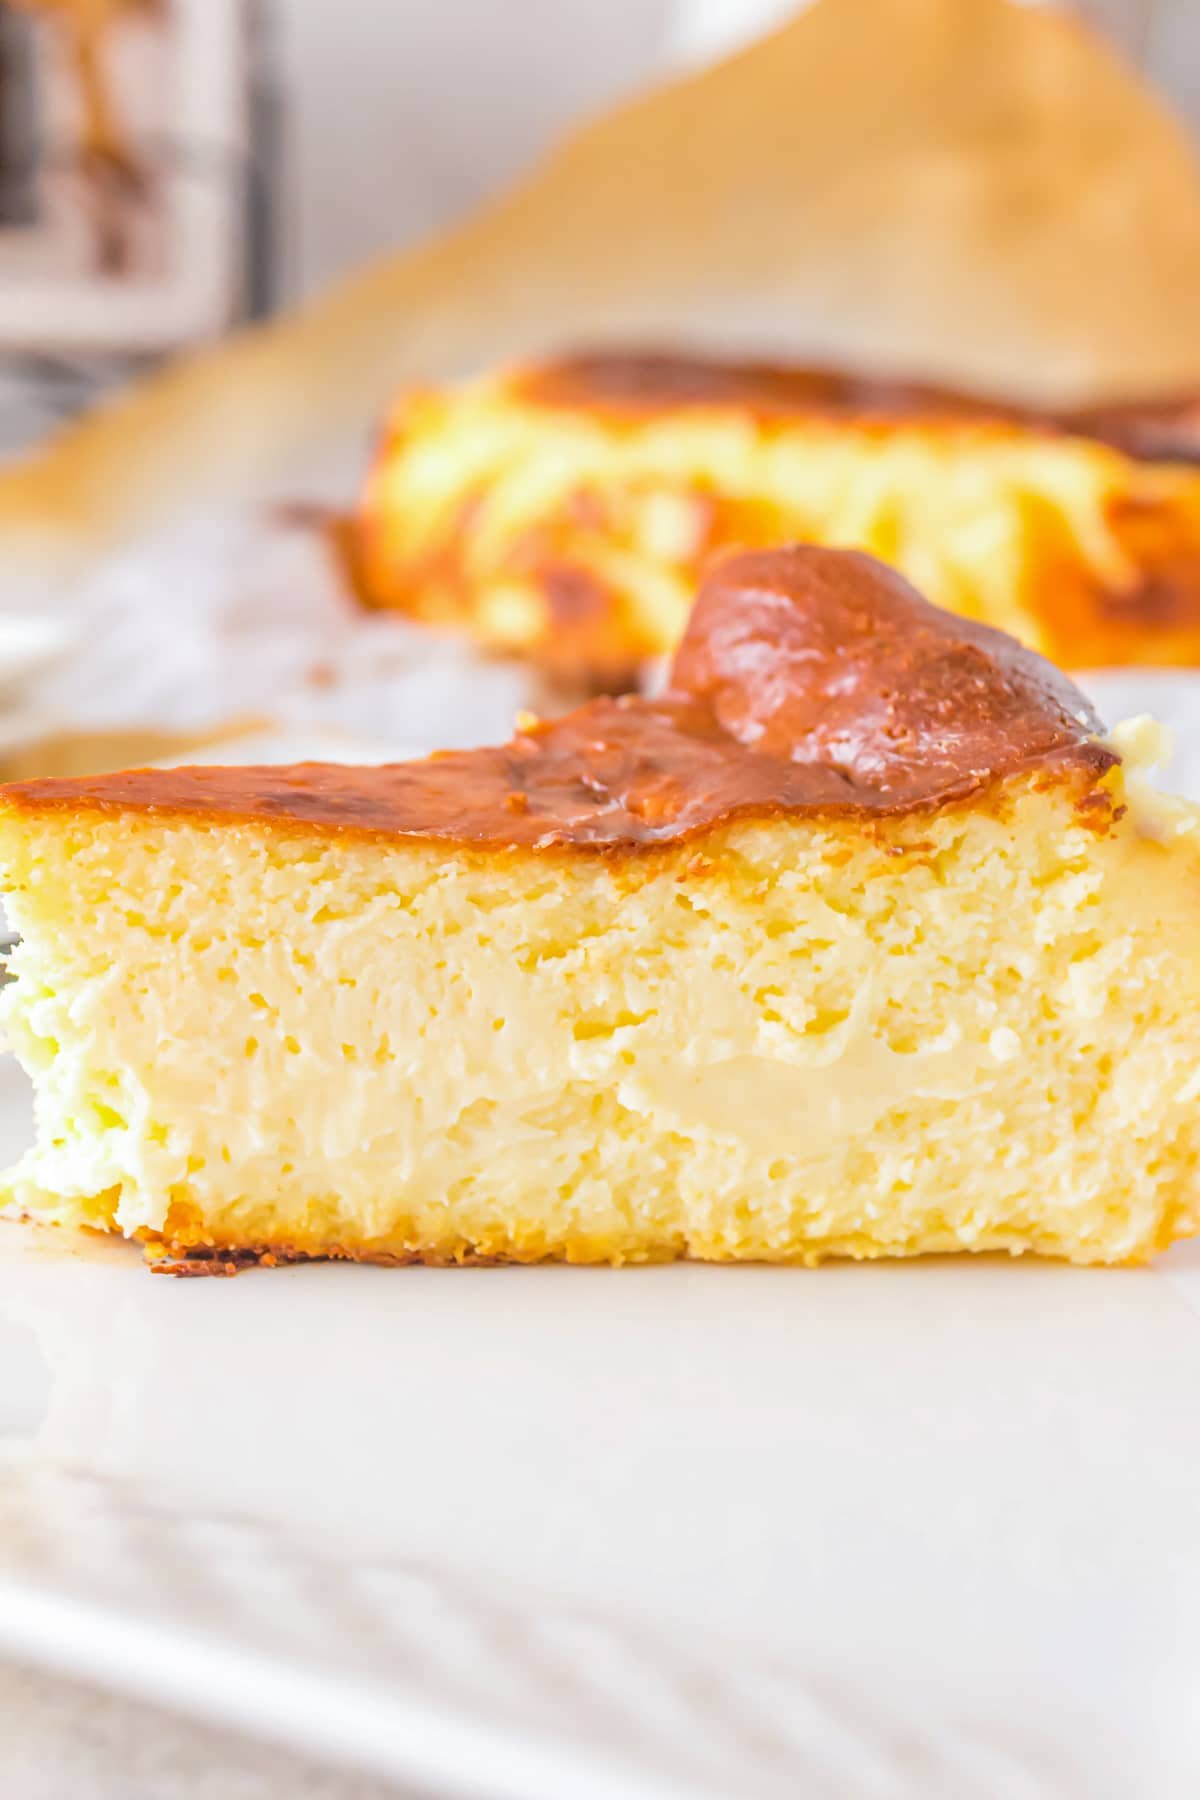 Slice of the Basque Cheesecake Recipe.